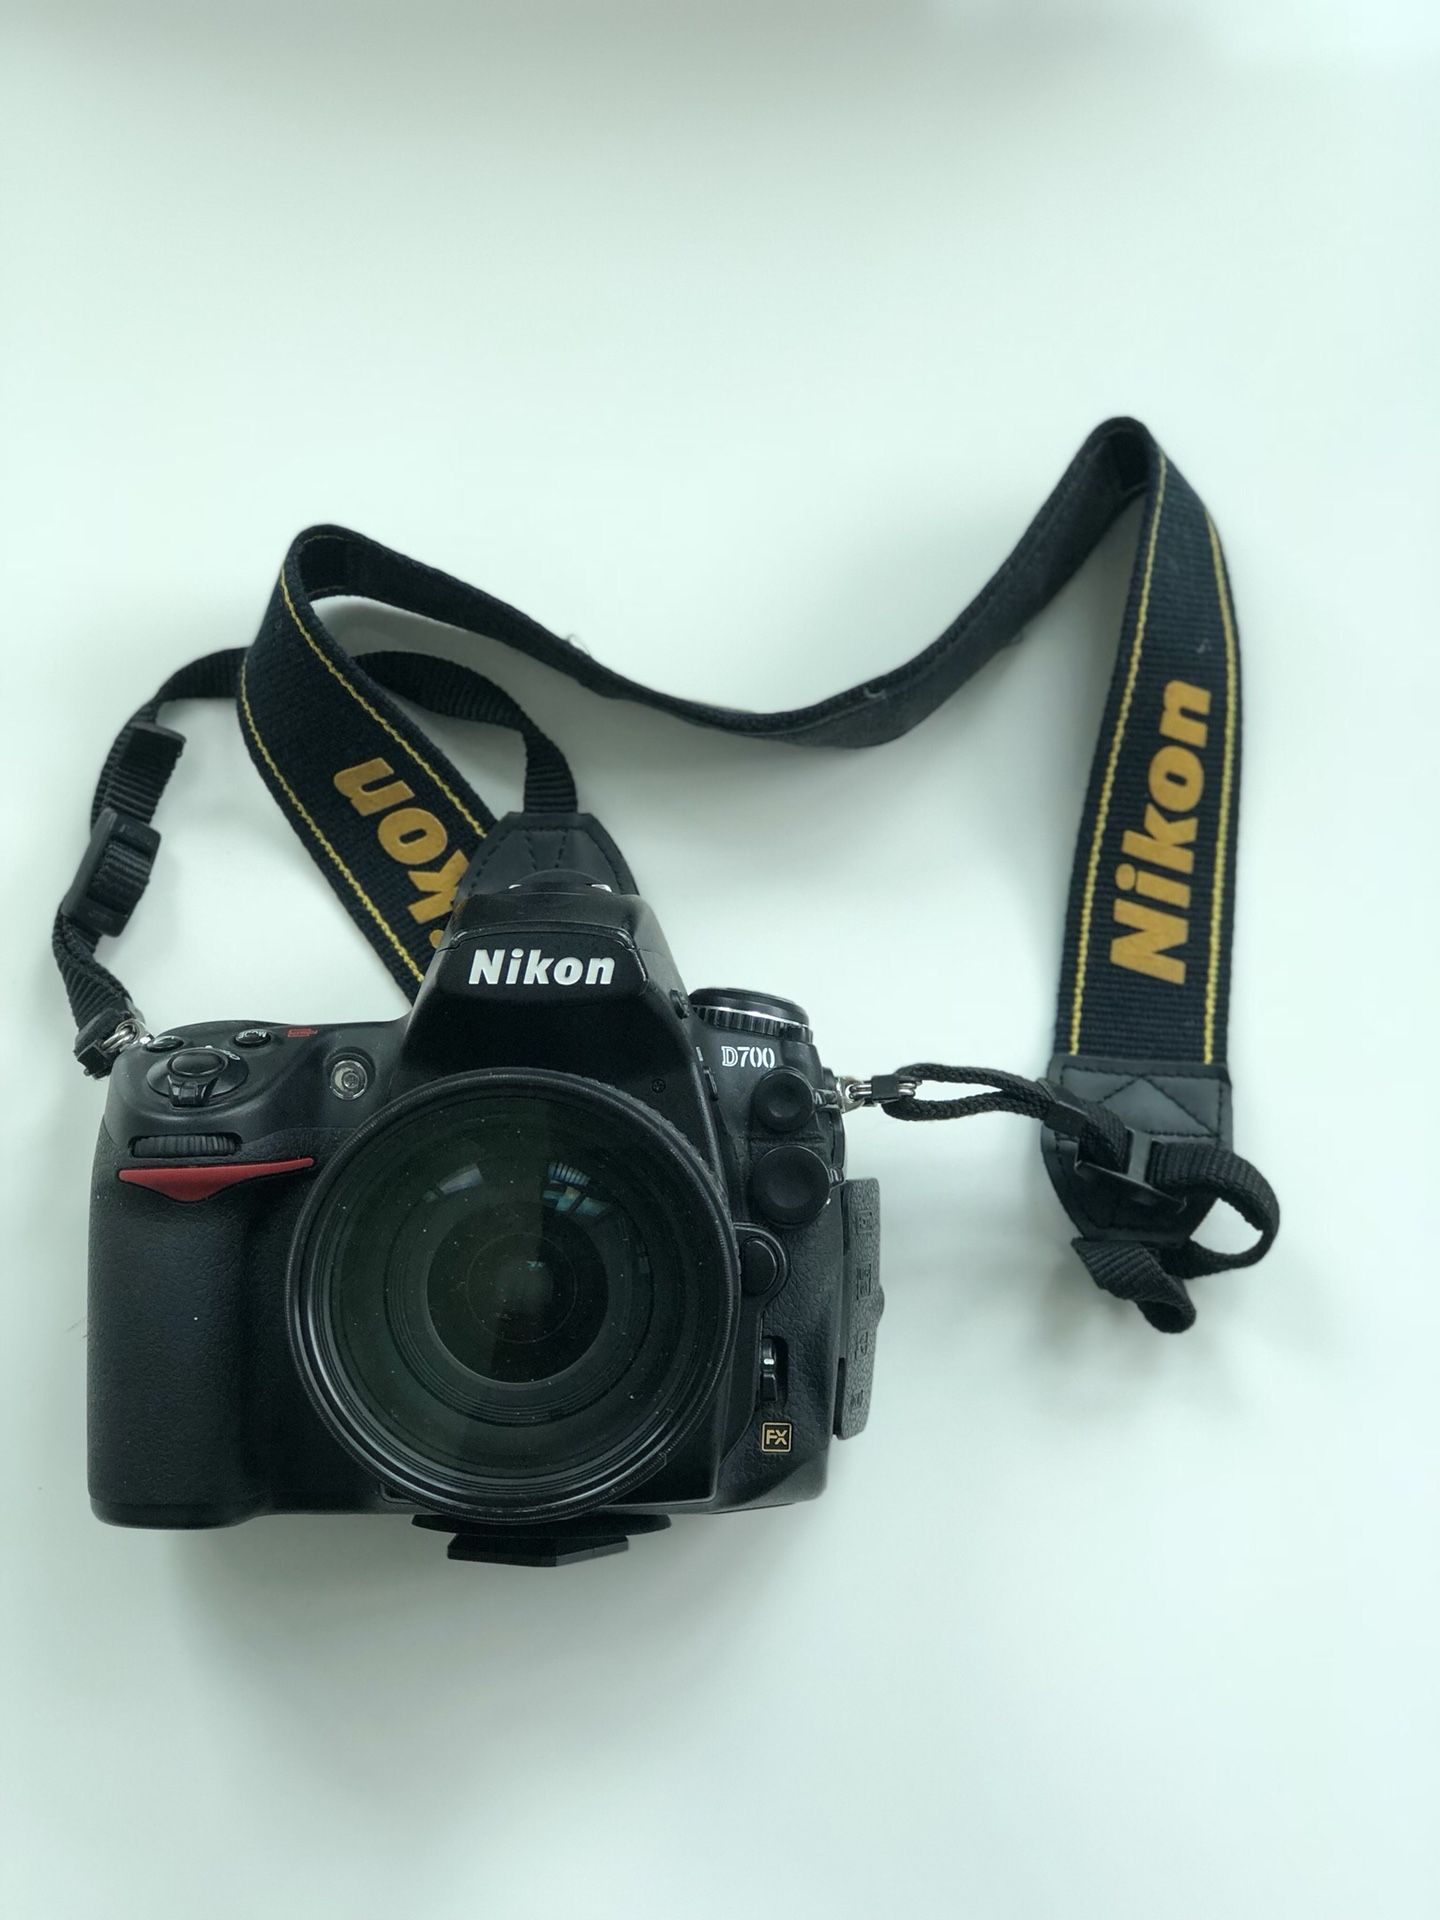 Nikon D700 with 28-75 mm lens.